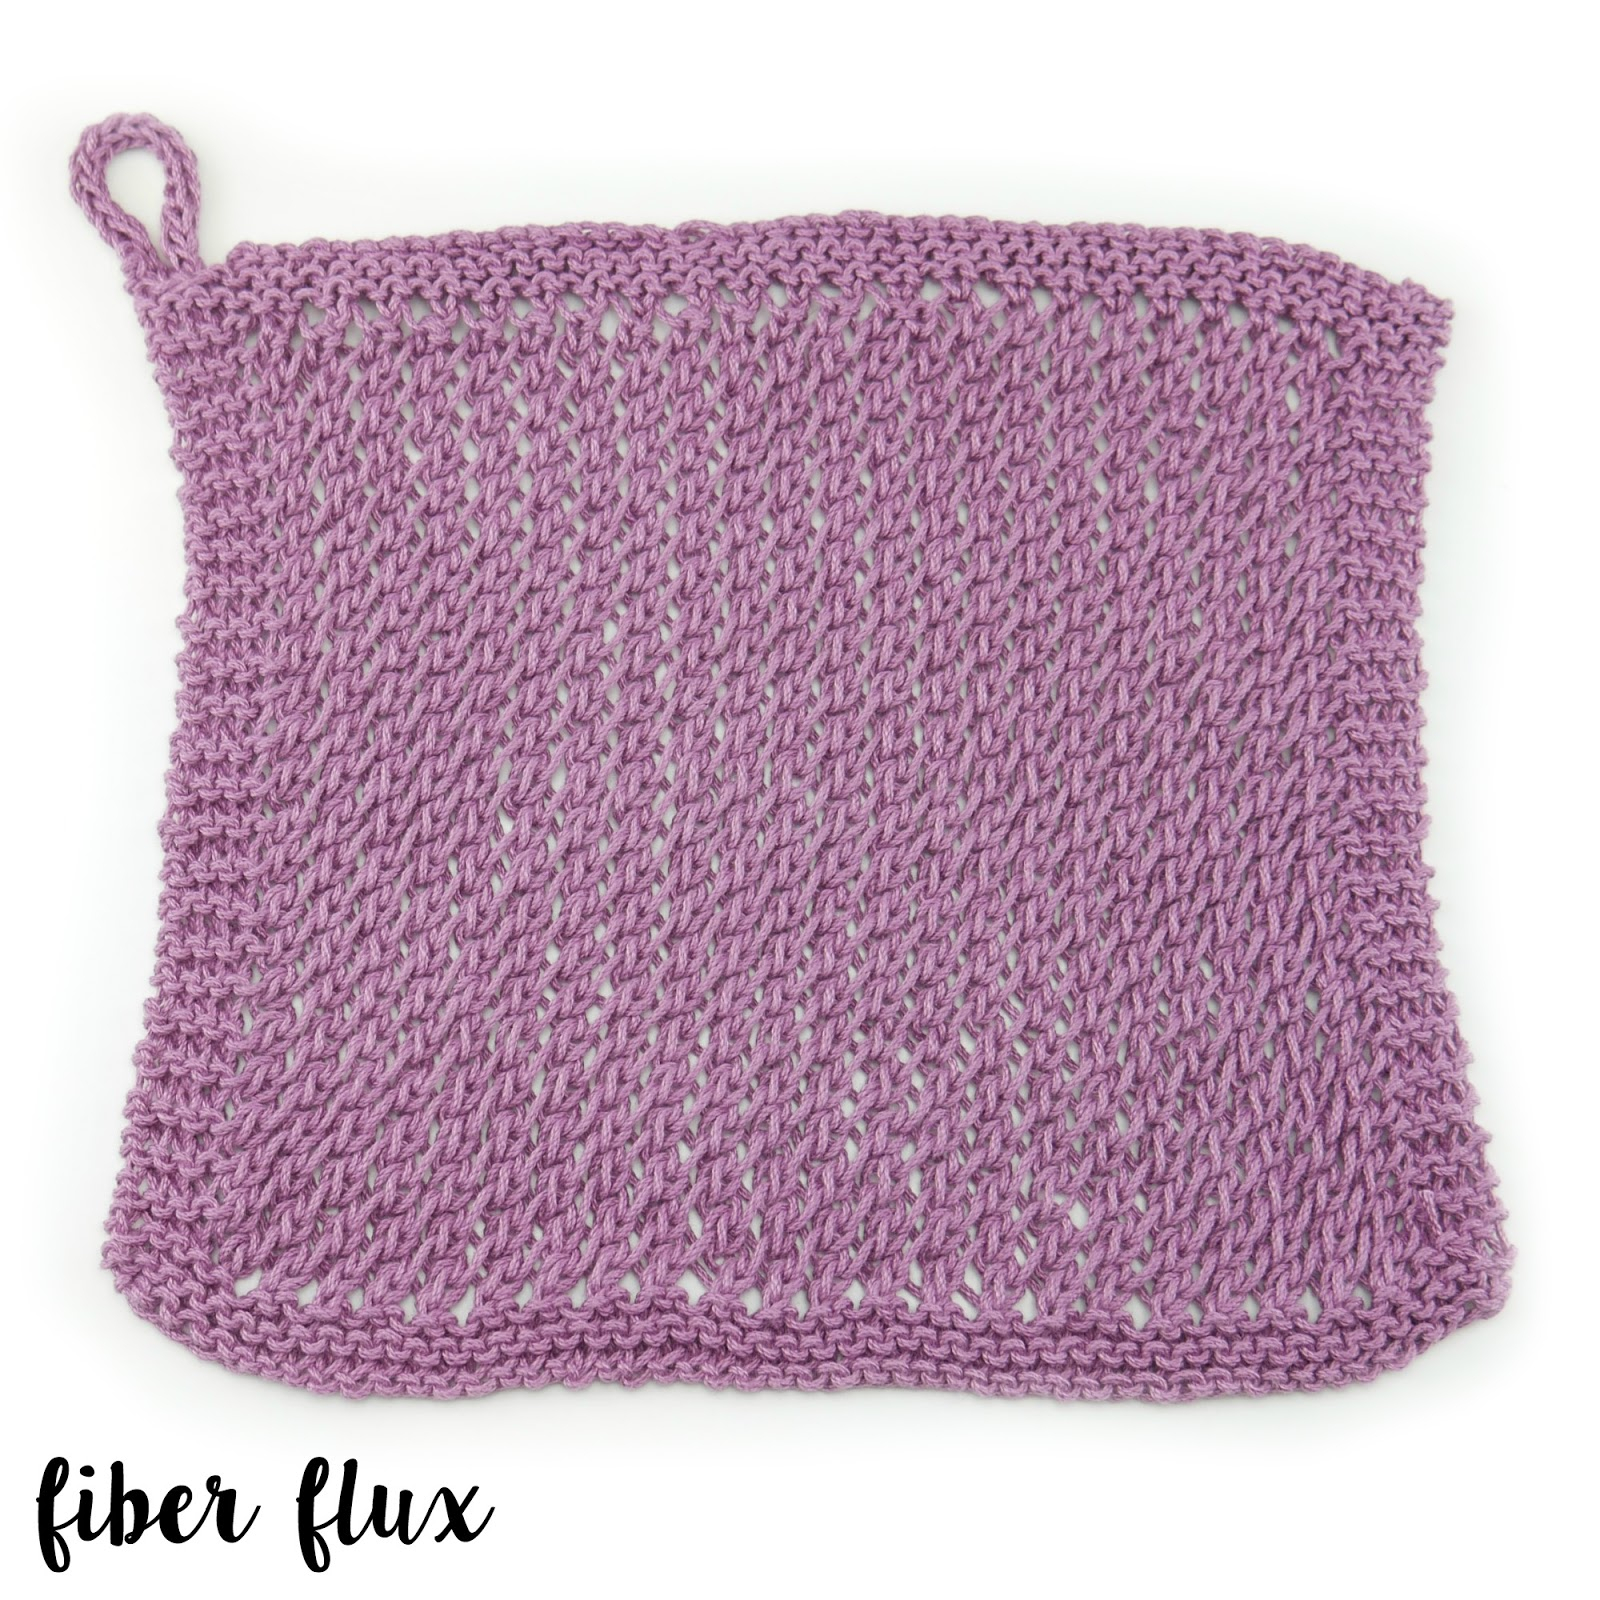 Free Knitted Dishcloth Pattern Fiber Flux Free Knitting Patterntextured Lace Dishcloth